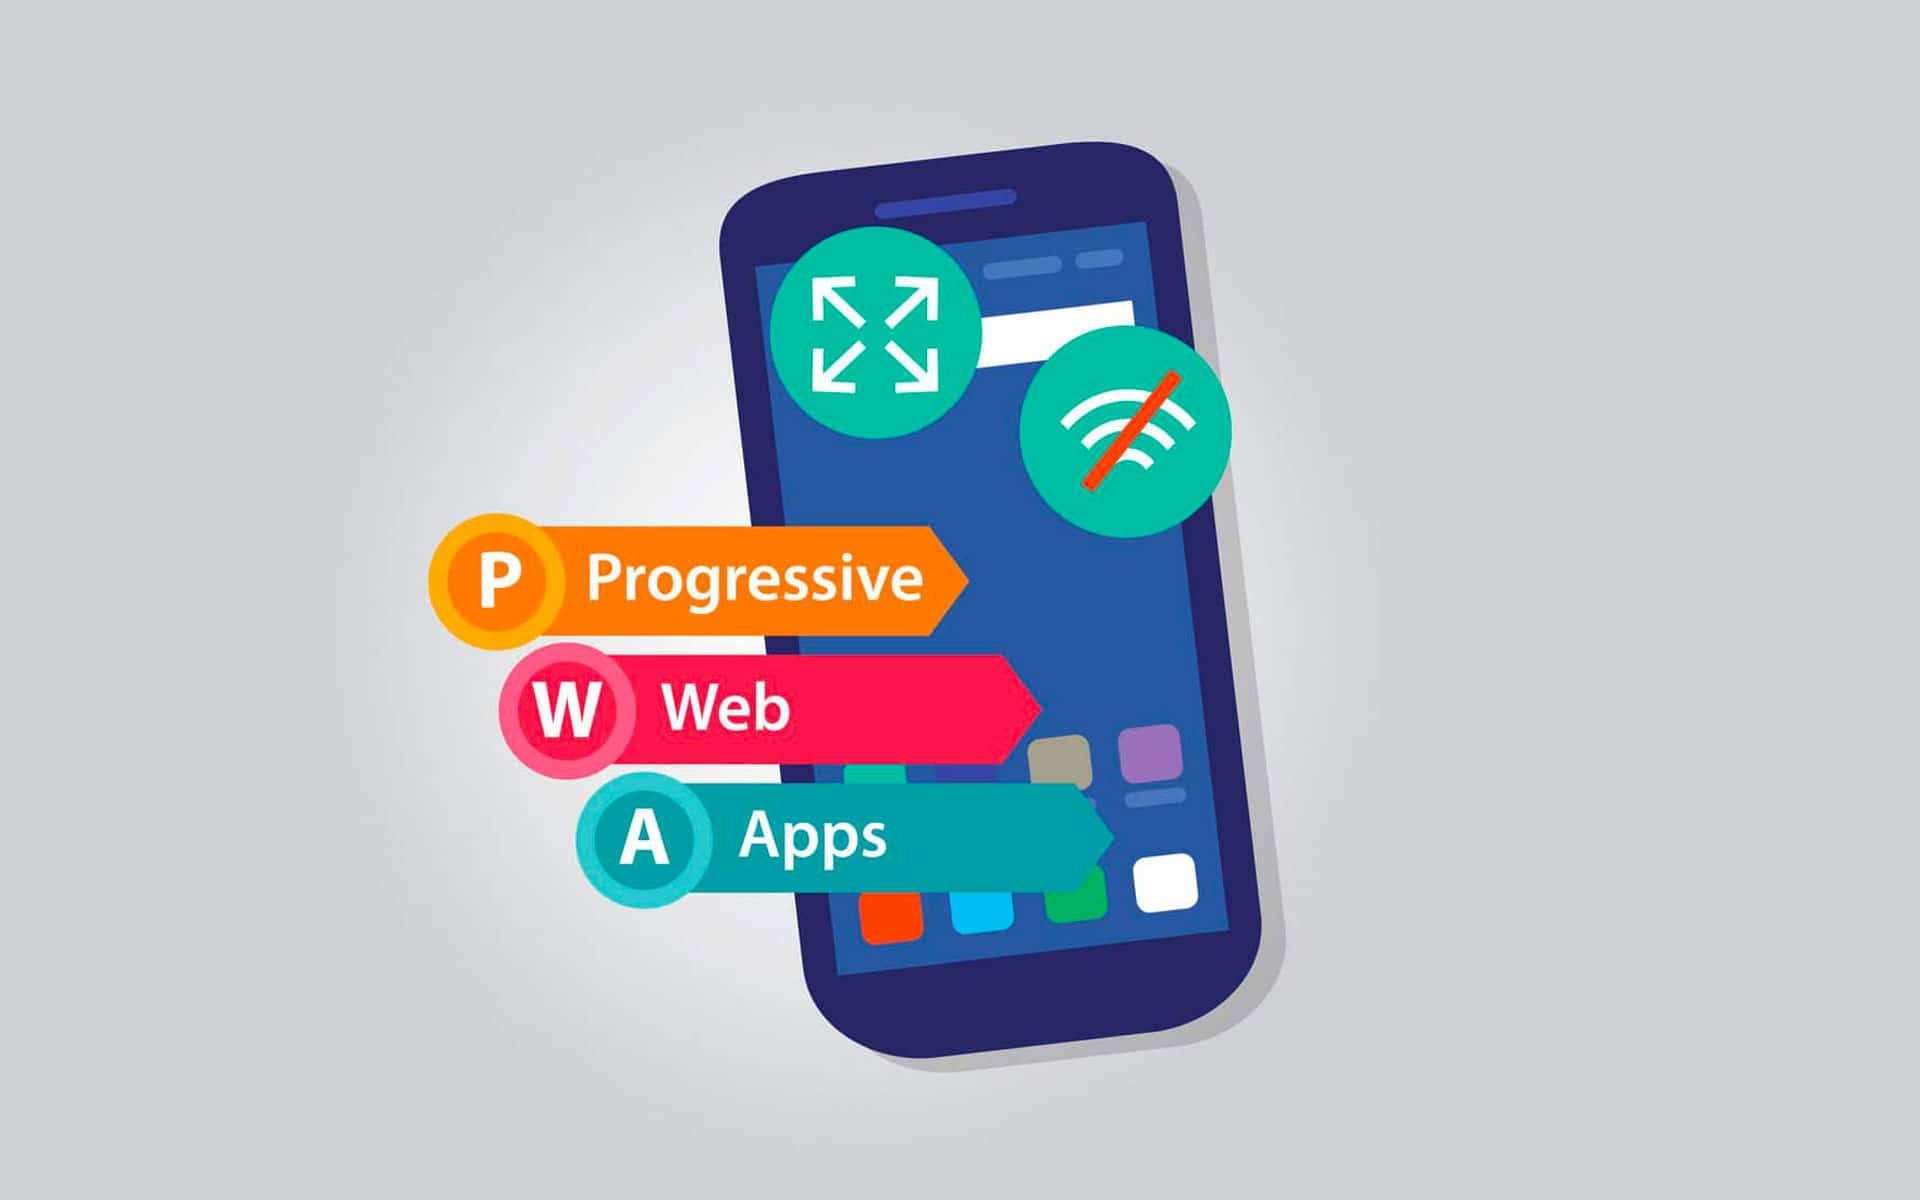 Application is being updated. PWA приложения. Веб-приложения PWA. Прогрессивное веб-приложение. Технология PWA.